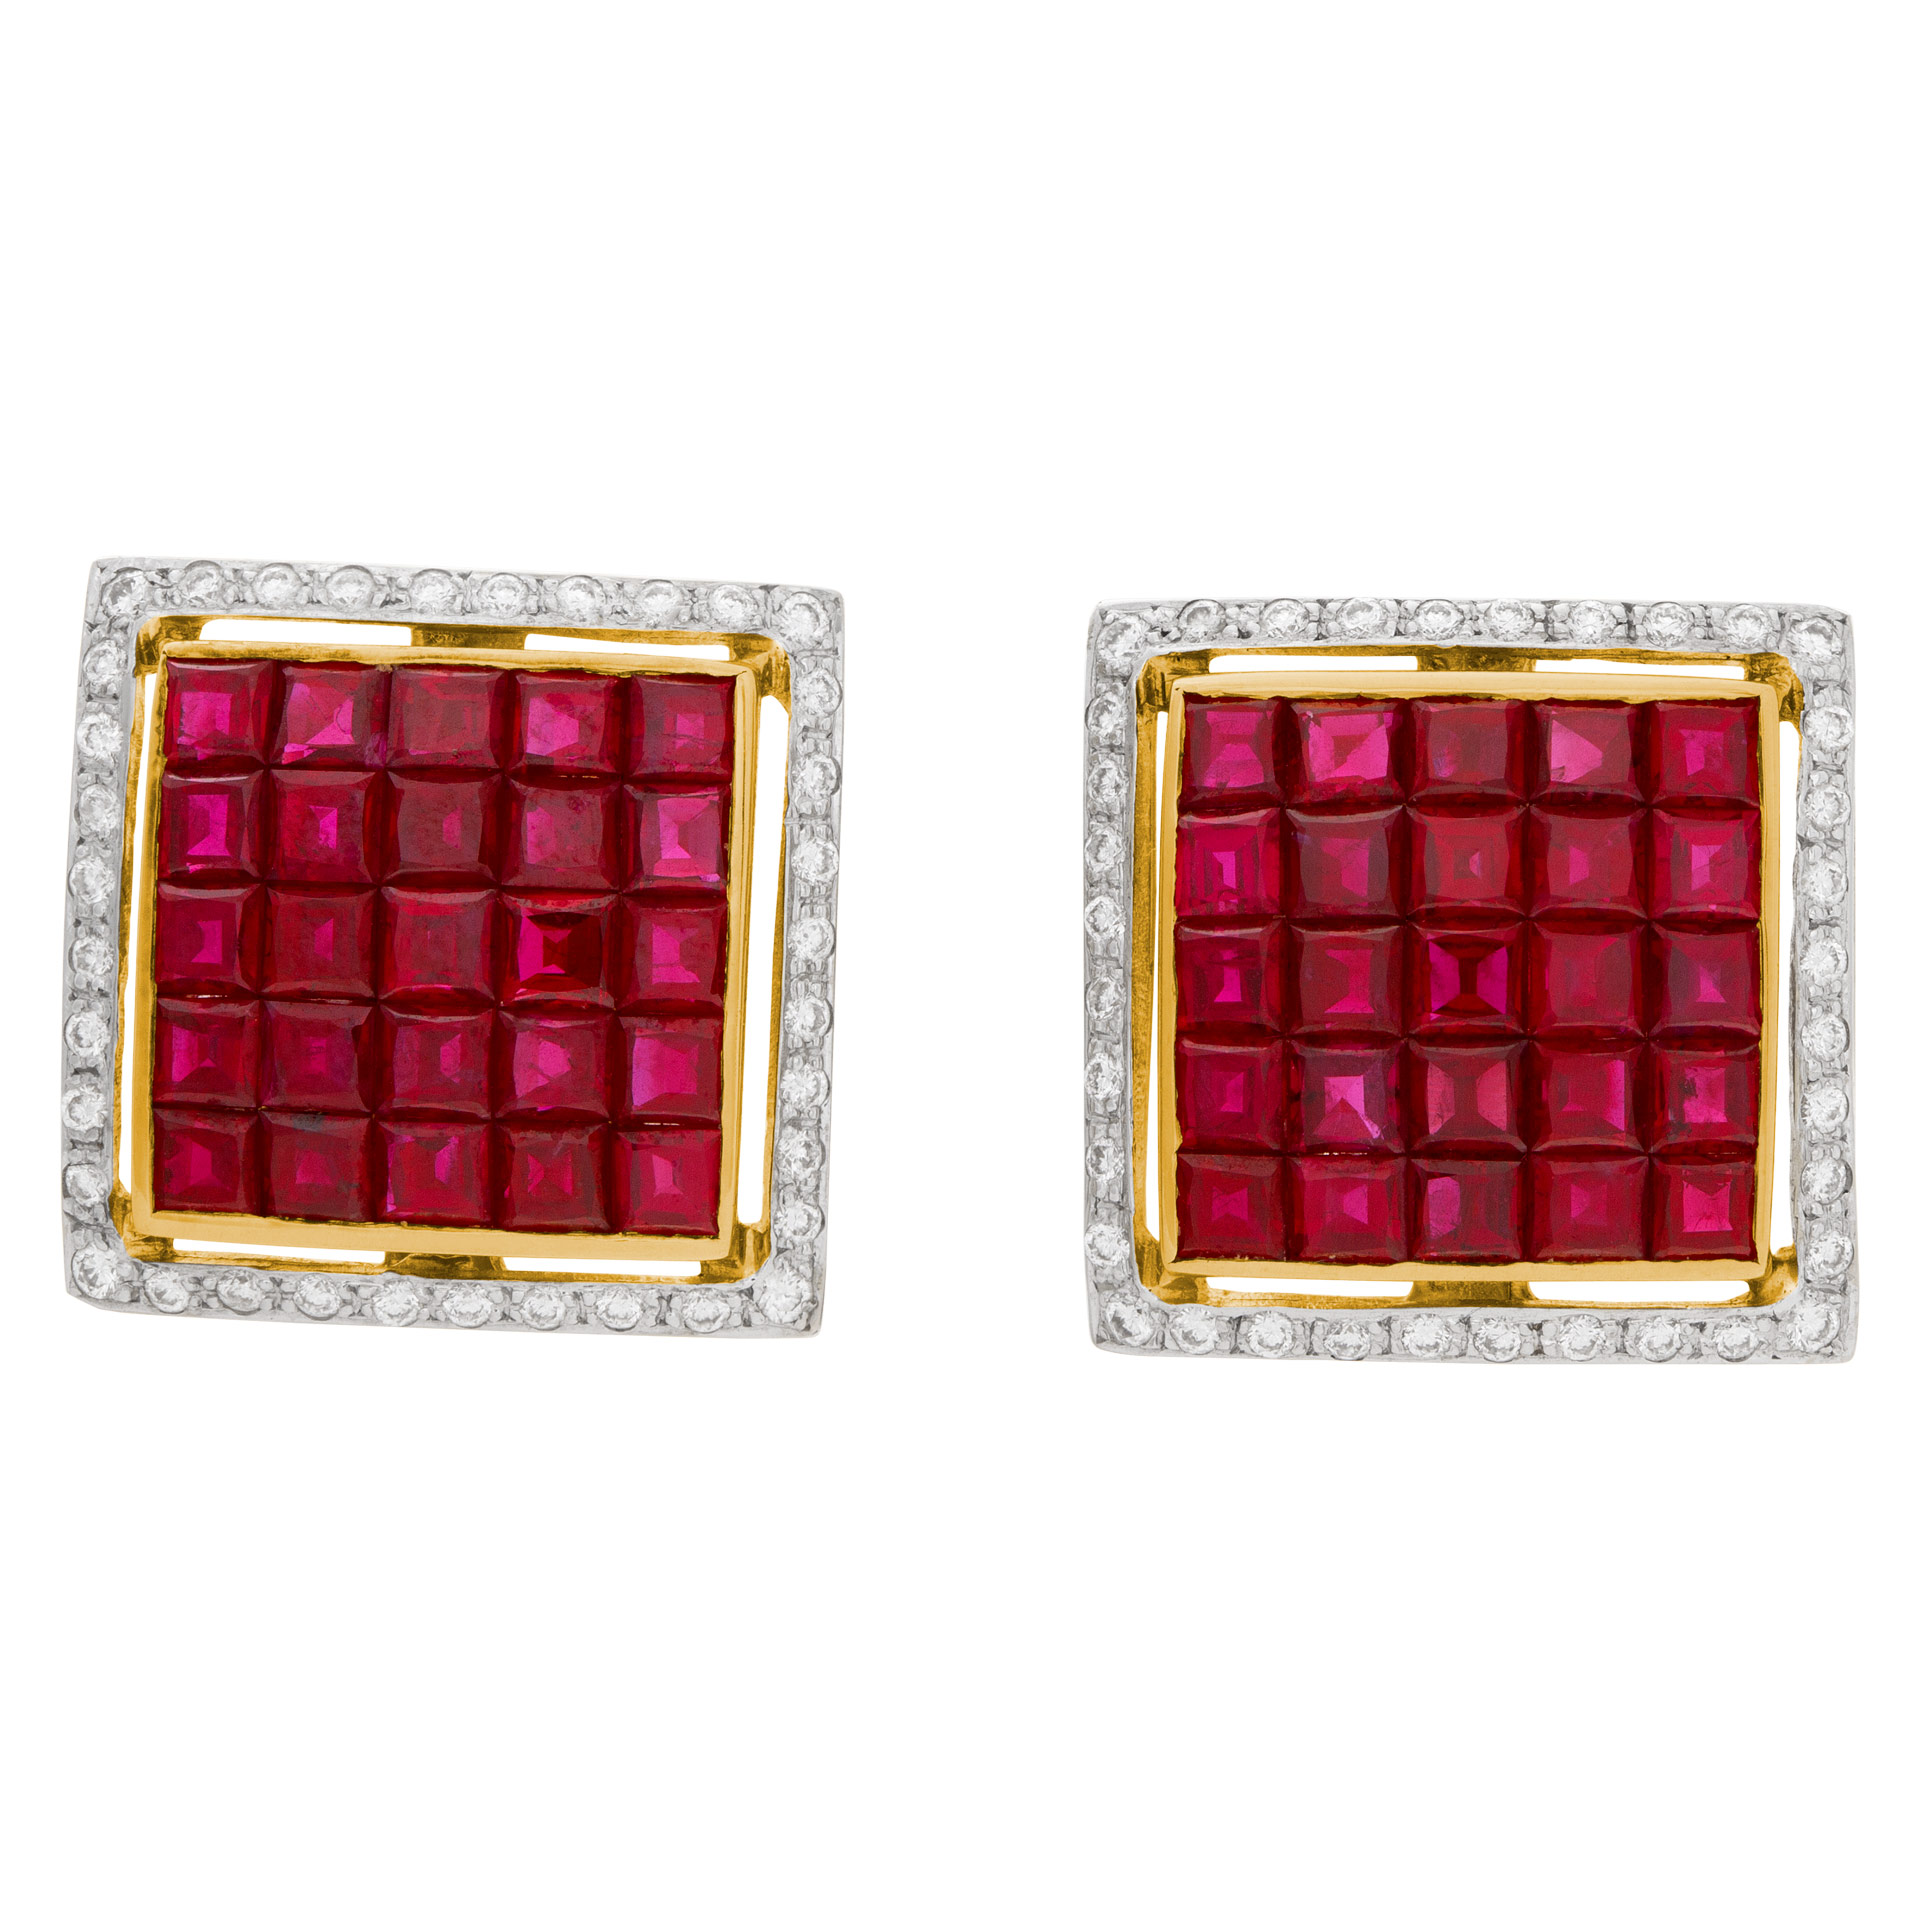 Diamond and ruby amazing earrings in 18k